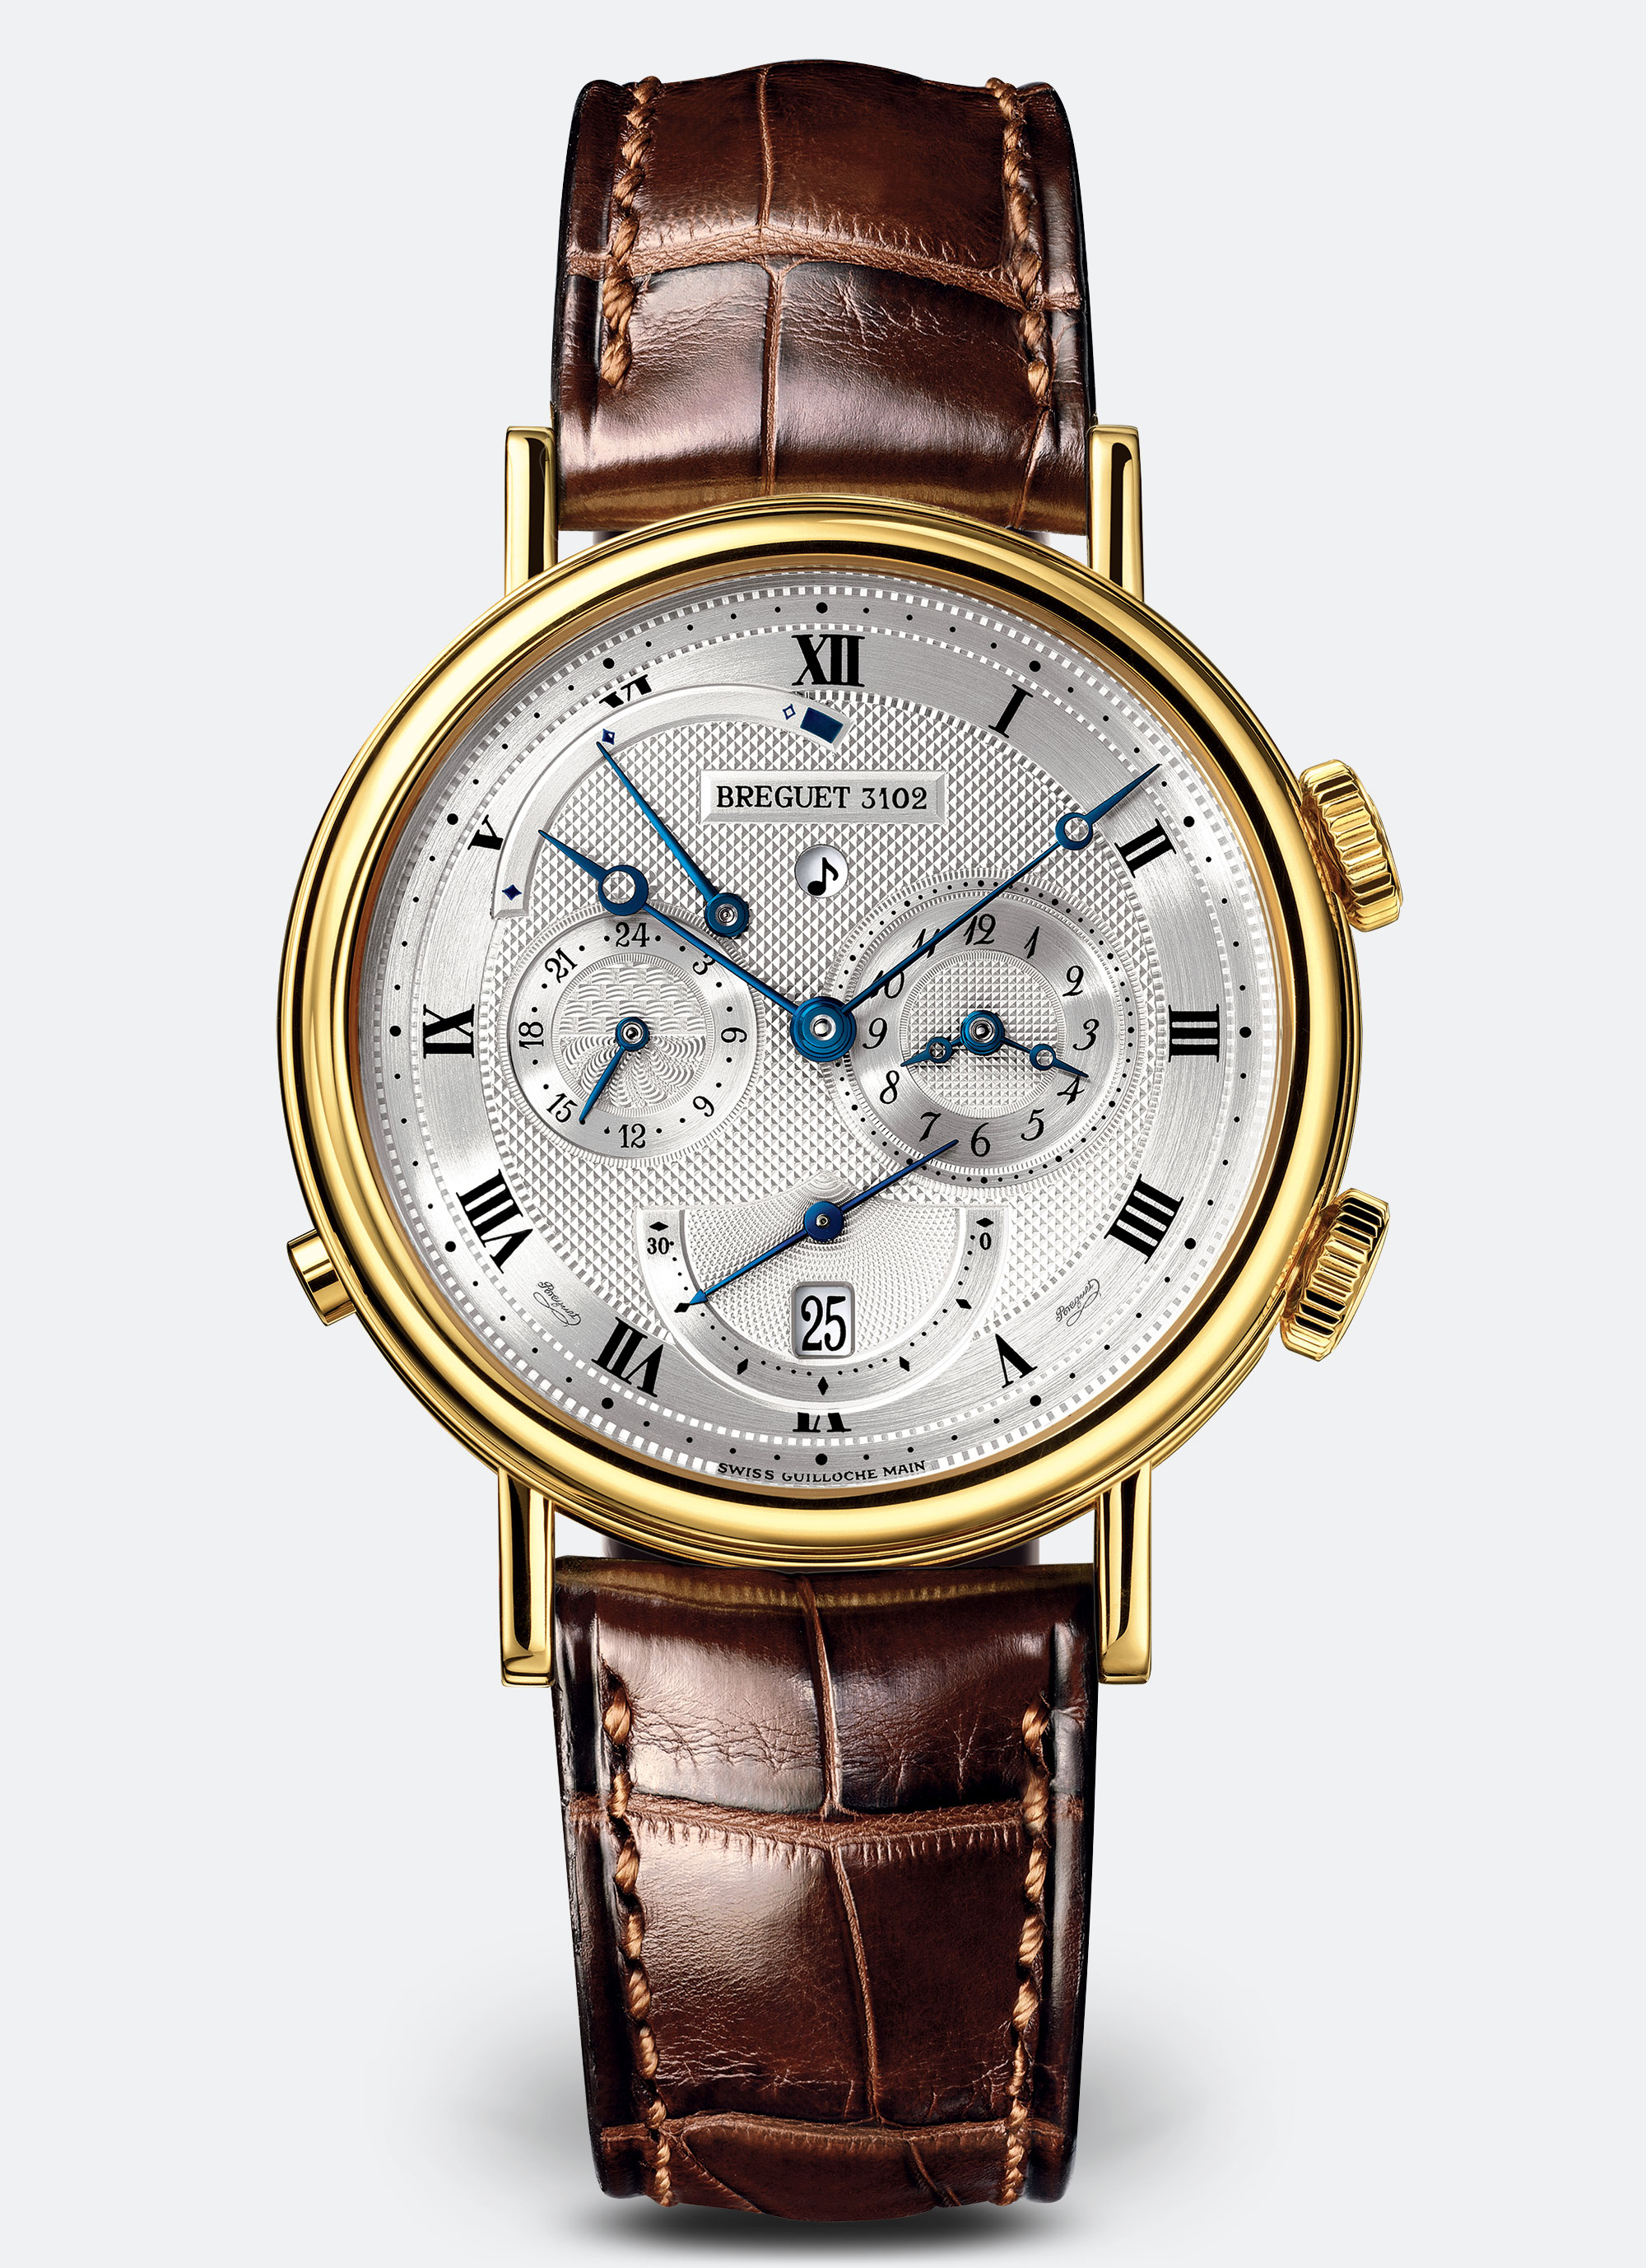 Hermes Paris Fake Watch